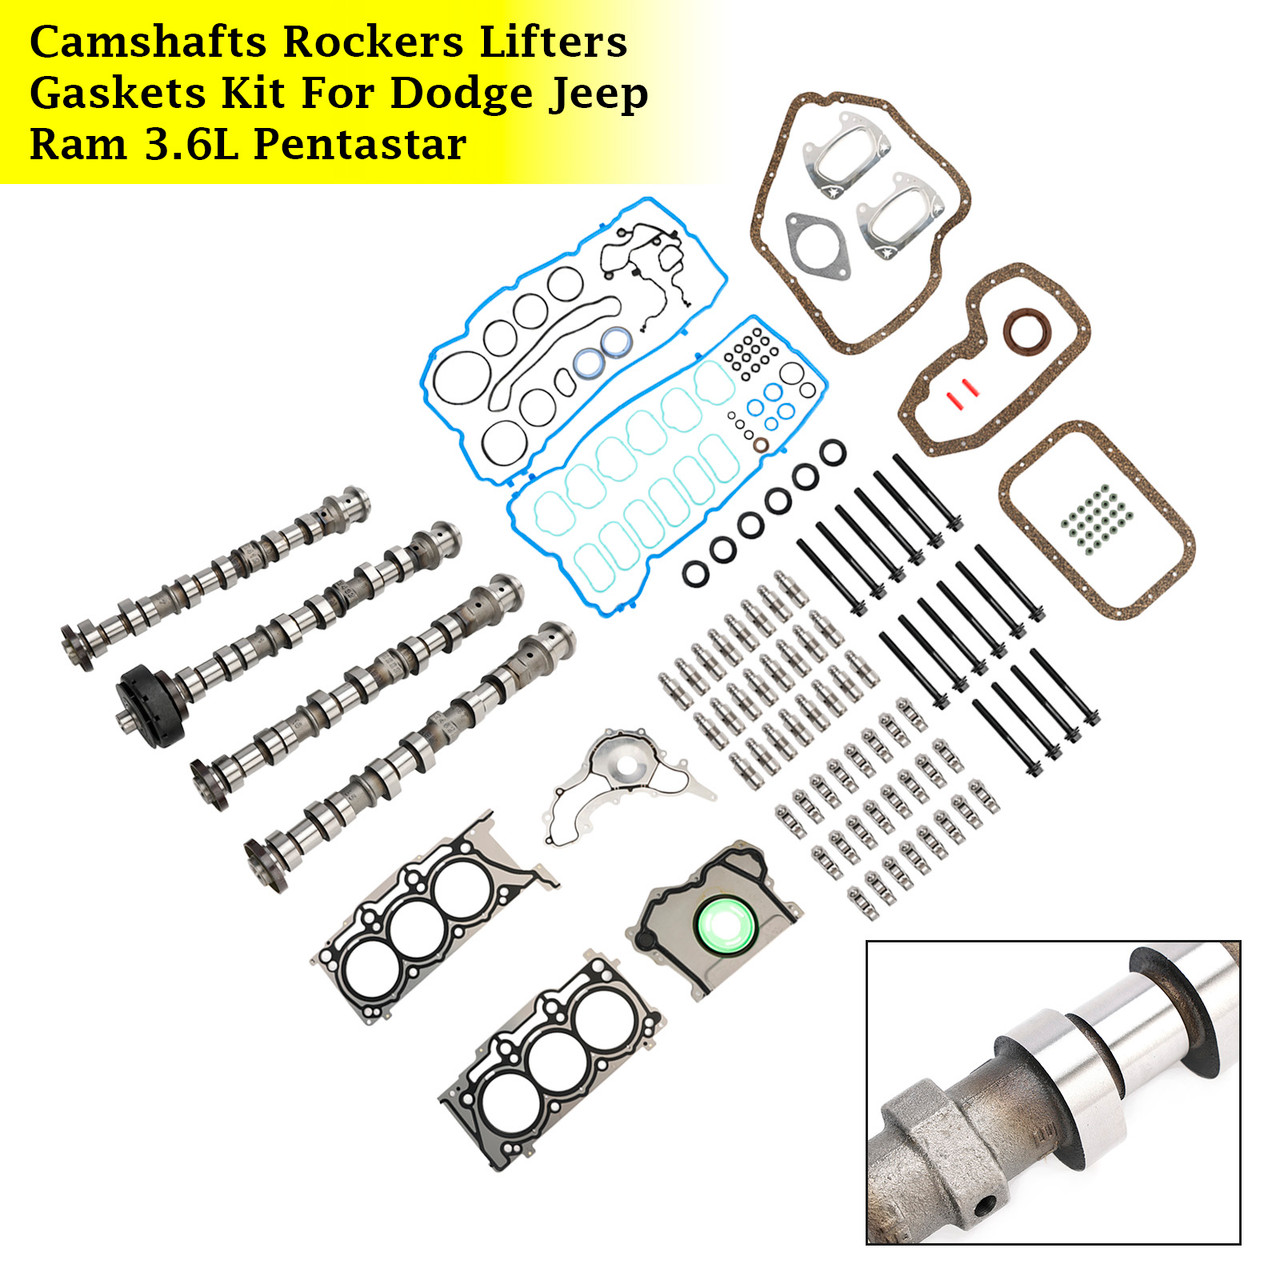 Camshafts Rockers Lifters Gaskets Kit For Dodge Jeep Ram 3.6L Pentastar